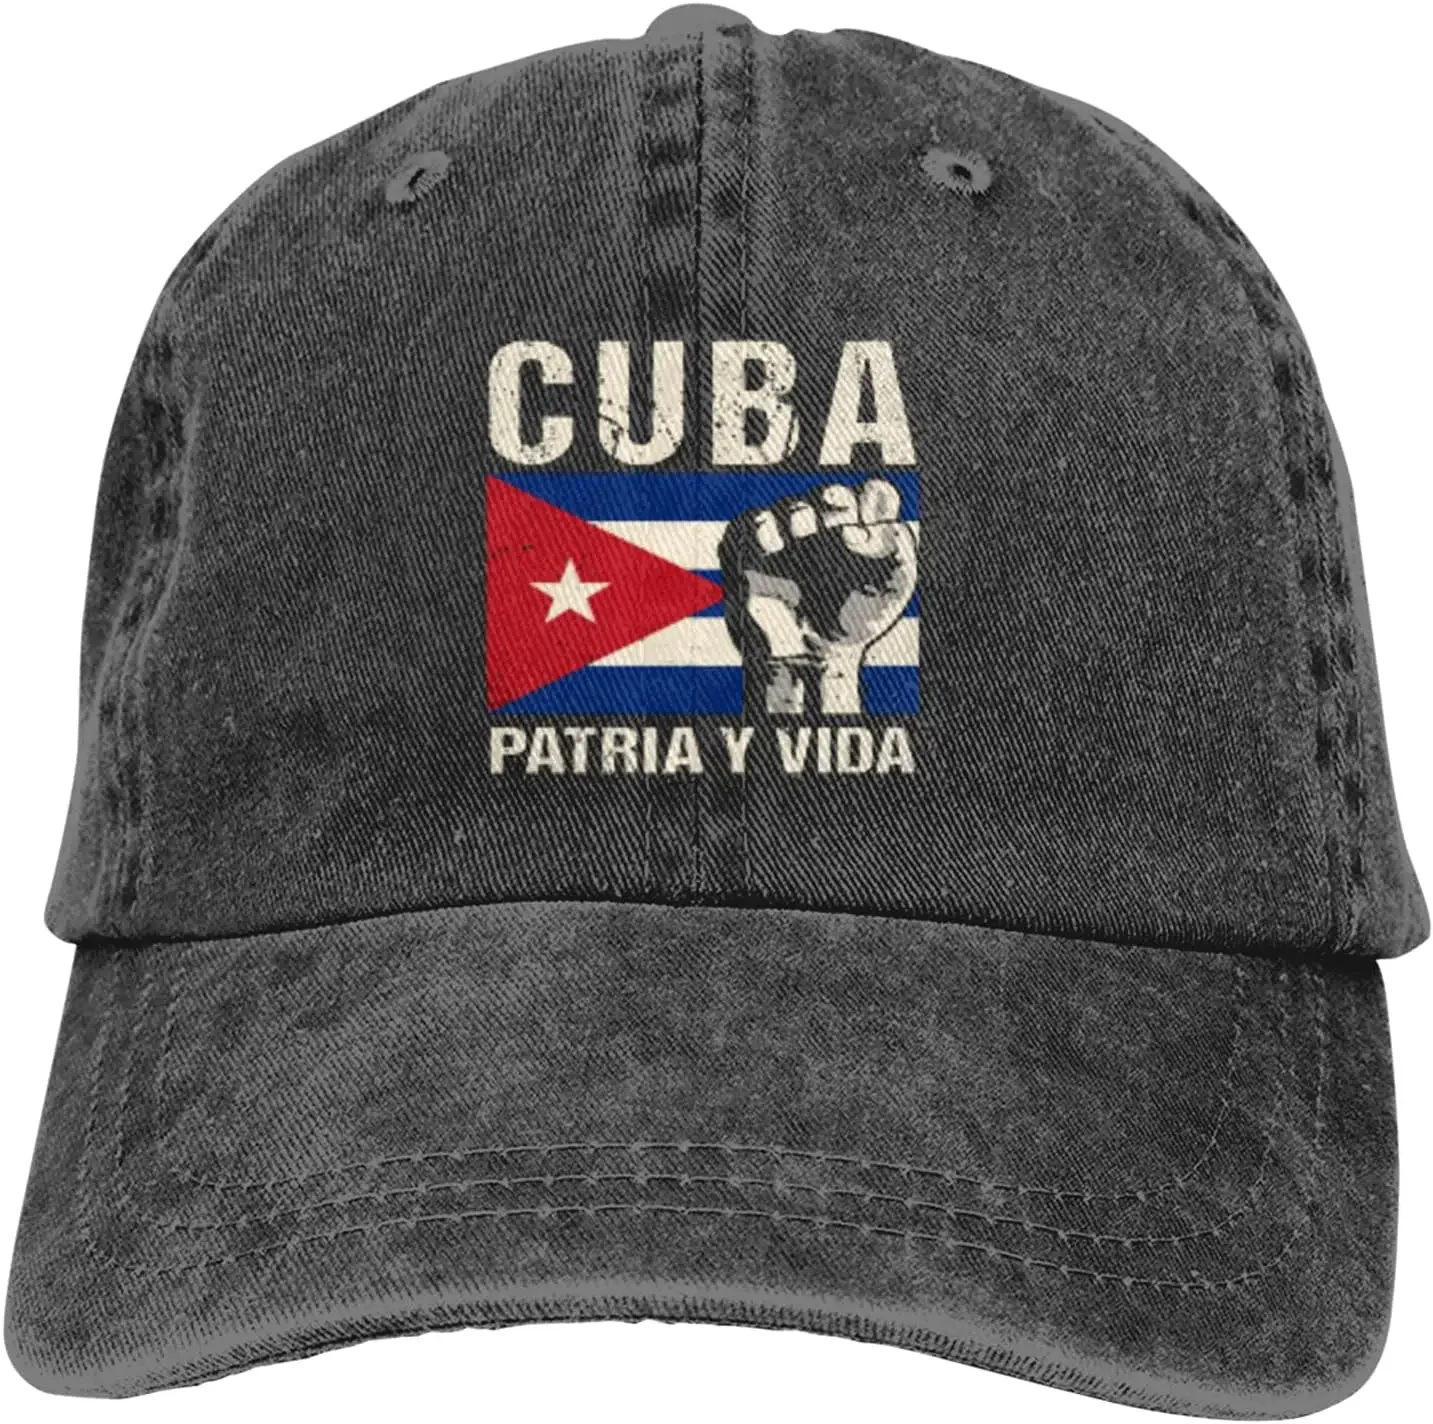 

Cuba Flag Patria Y Vida - Free Cuba Cap Adult Adjustable Mountaineering Classic Washed Casquette Denim Cap Hat for Outdoor